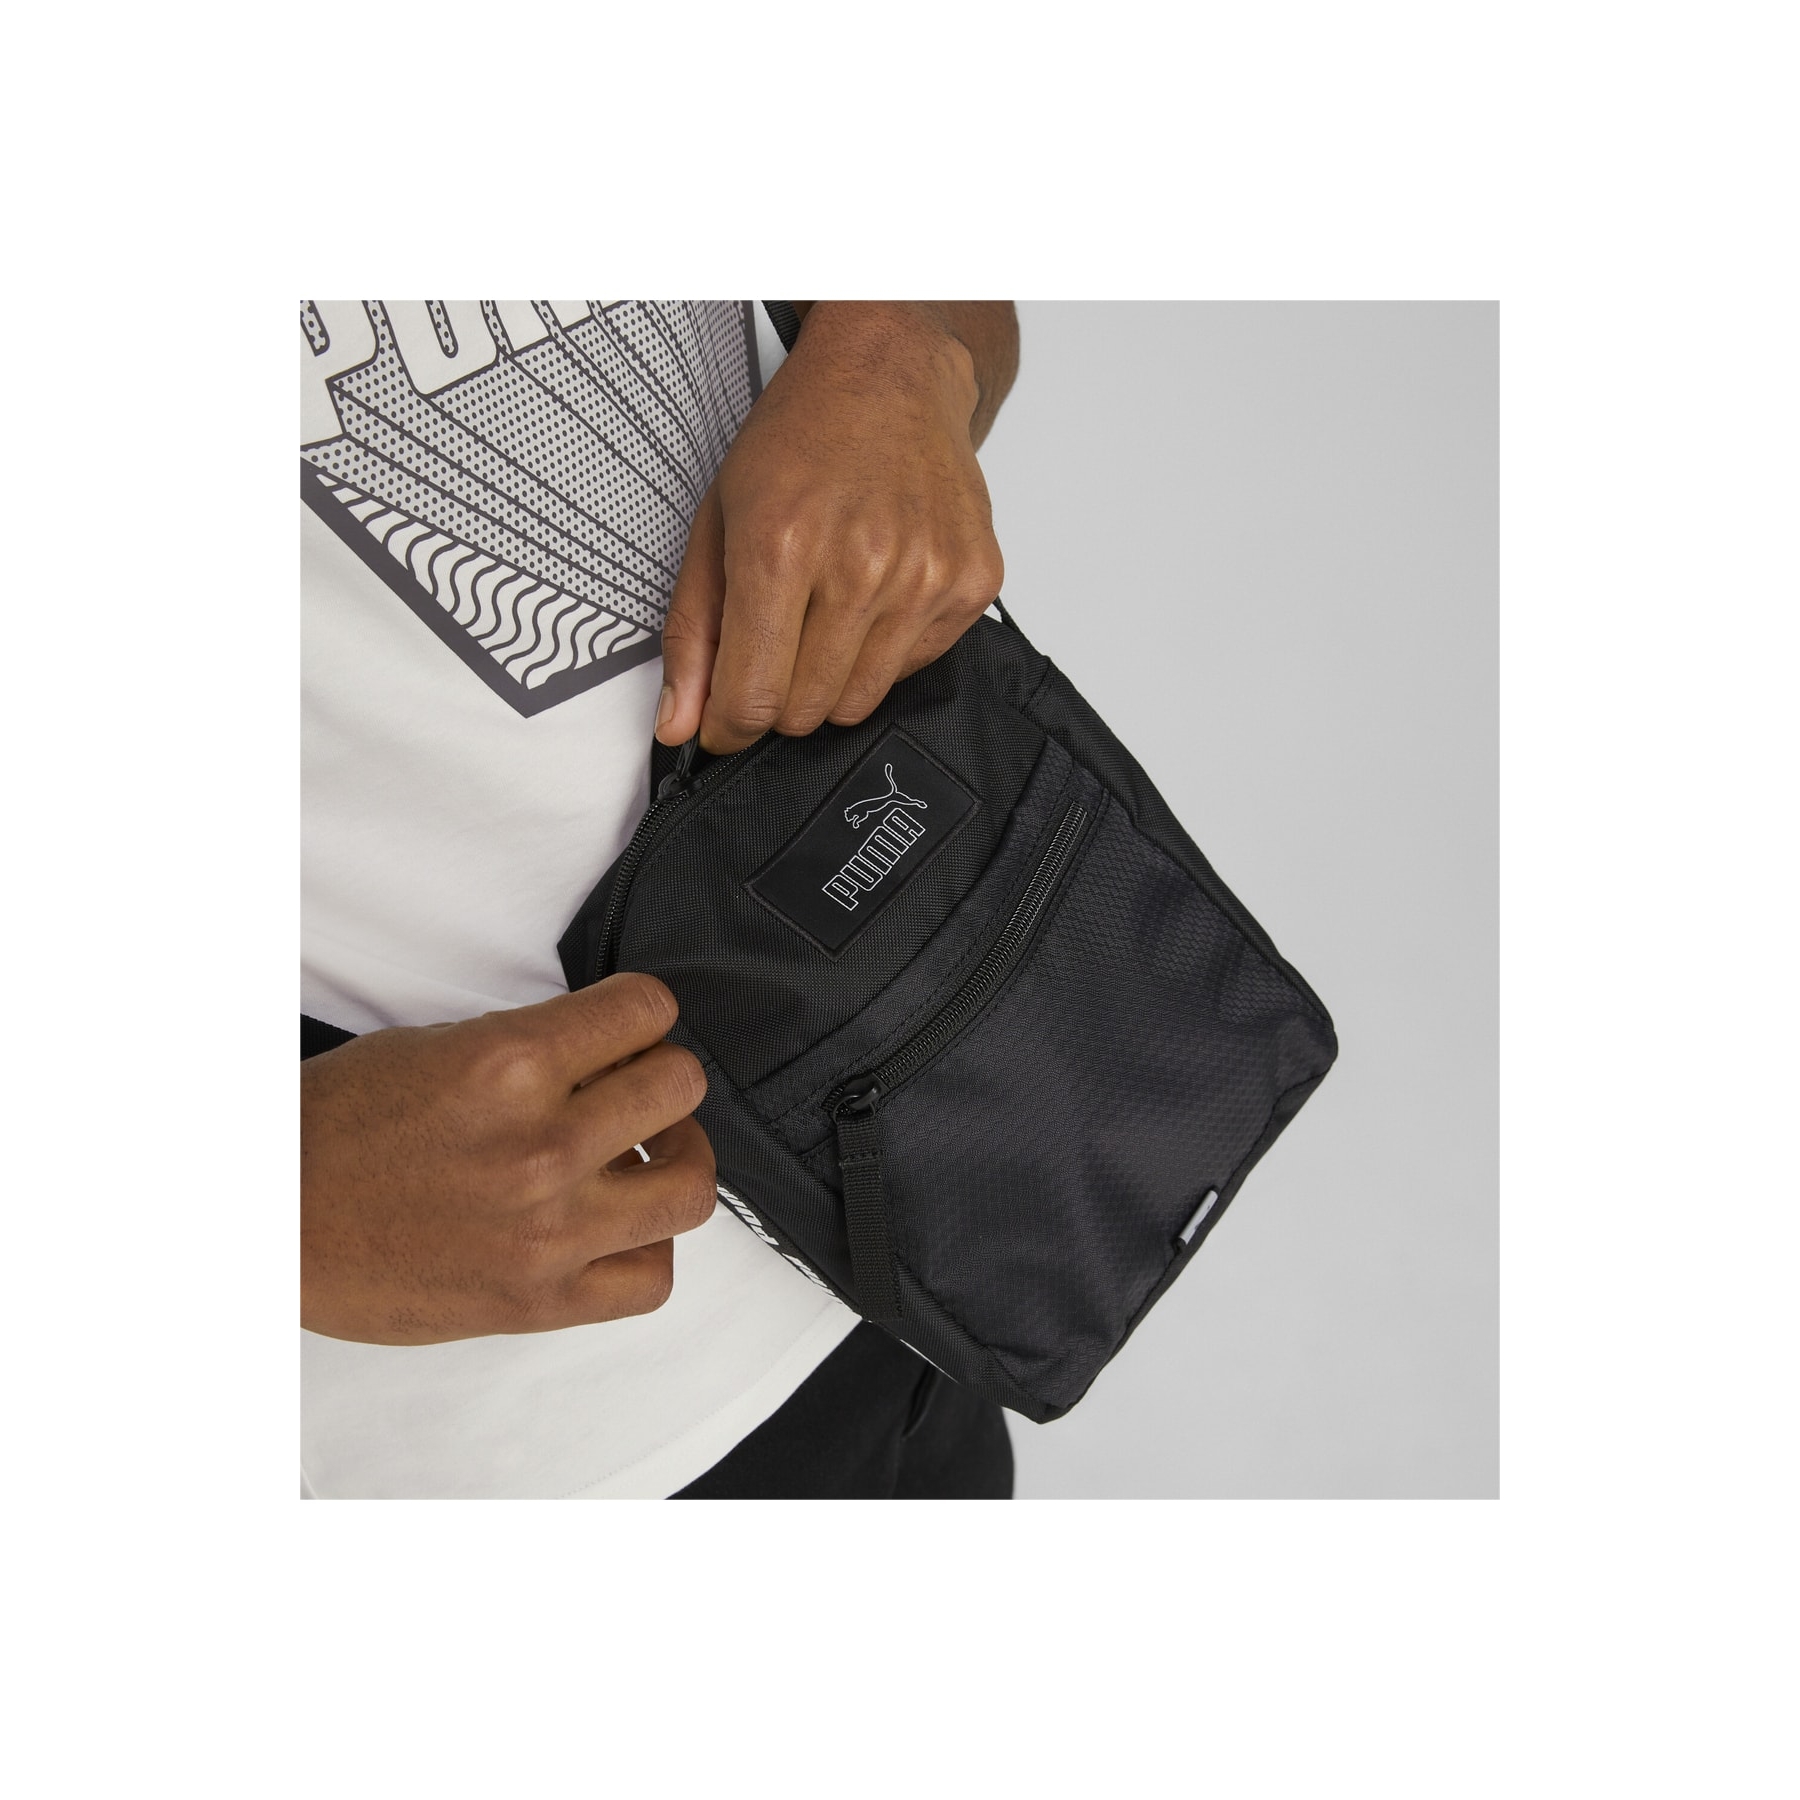 Puma Evoess Portable Erkek Siyah Omuz Çantası (079575-01)